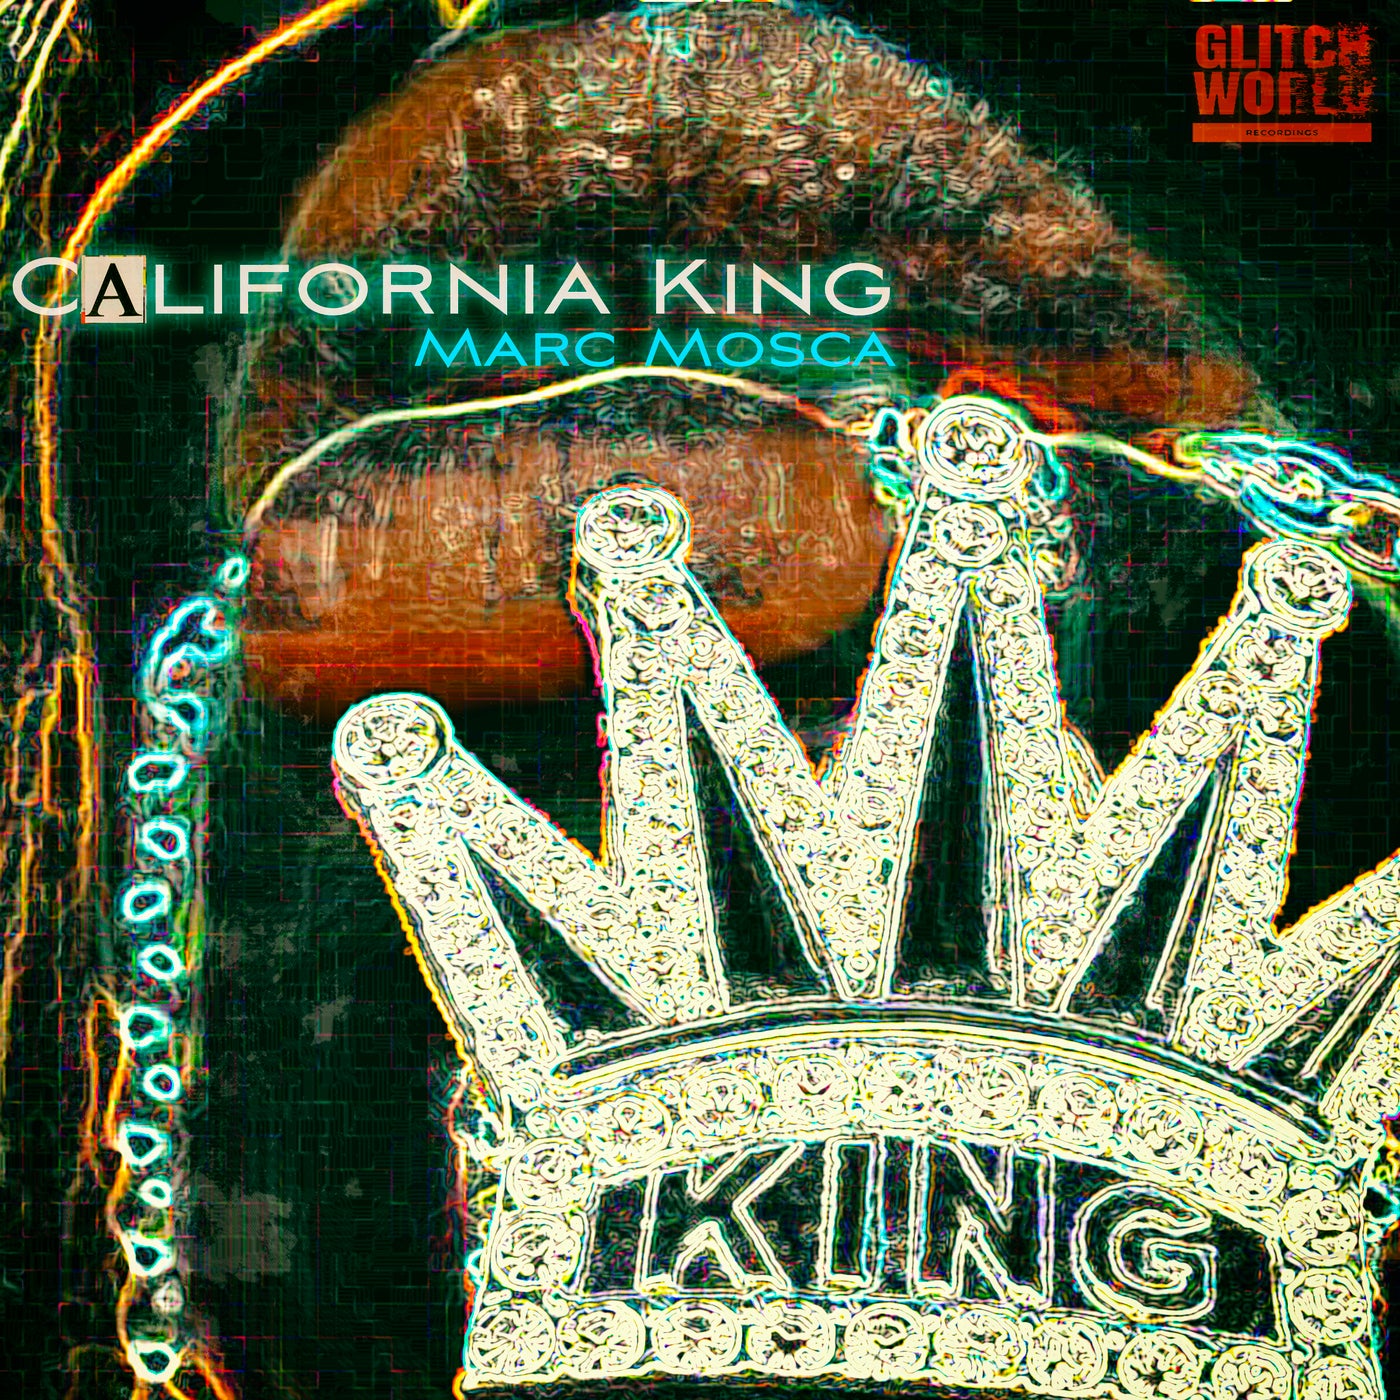 The original king. California King. Original King. Block & Crown, Marc Mosca - Let it Play on & on. Natalie da Mosca.